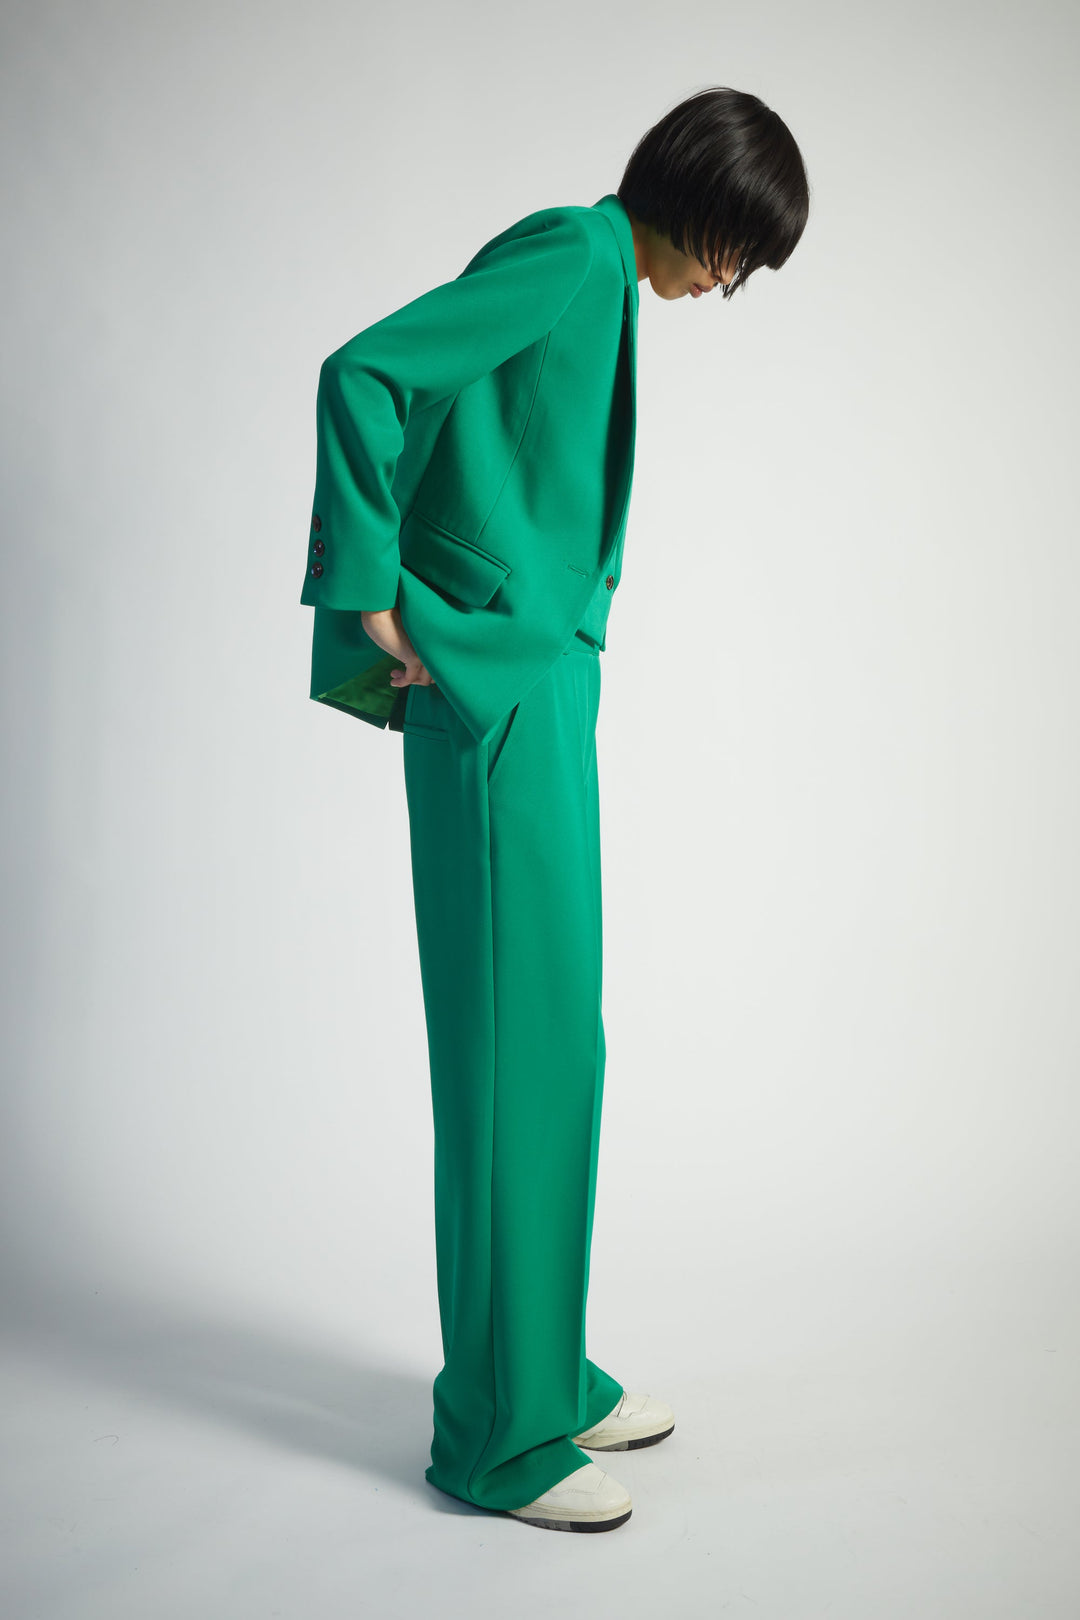 Saint Art New York - Gia Blazer in Emerald